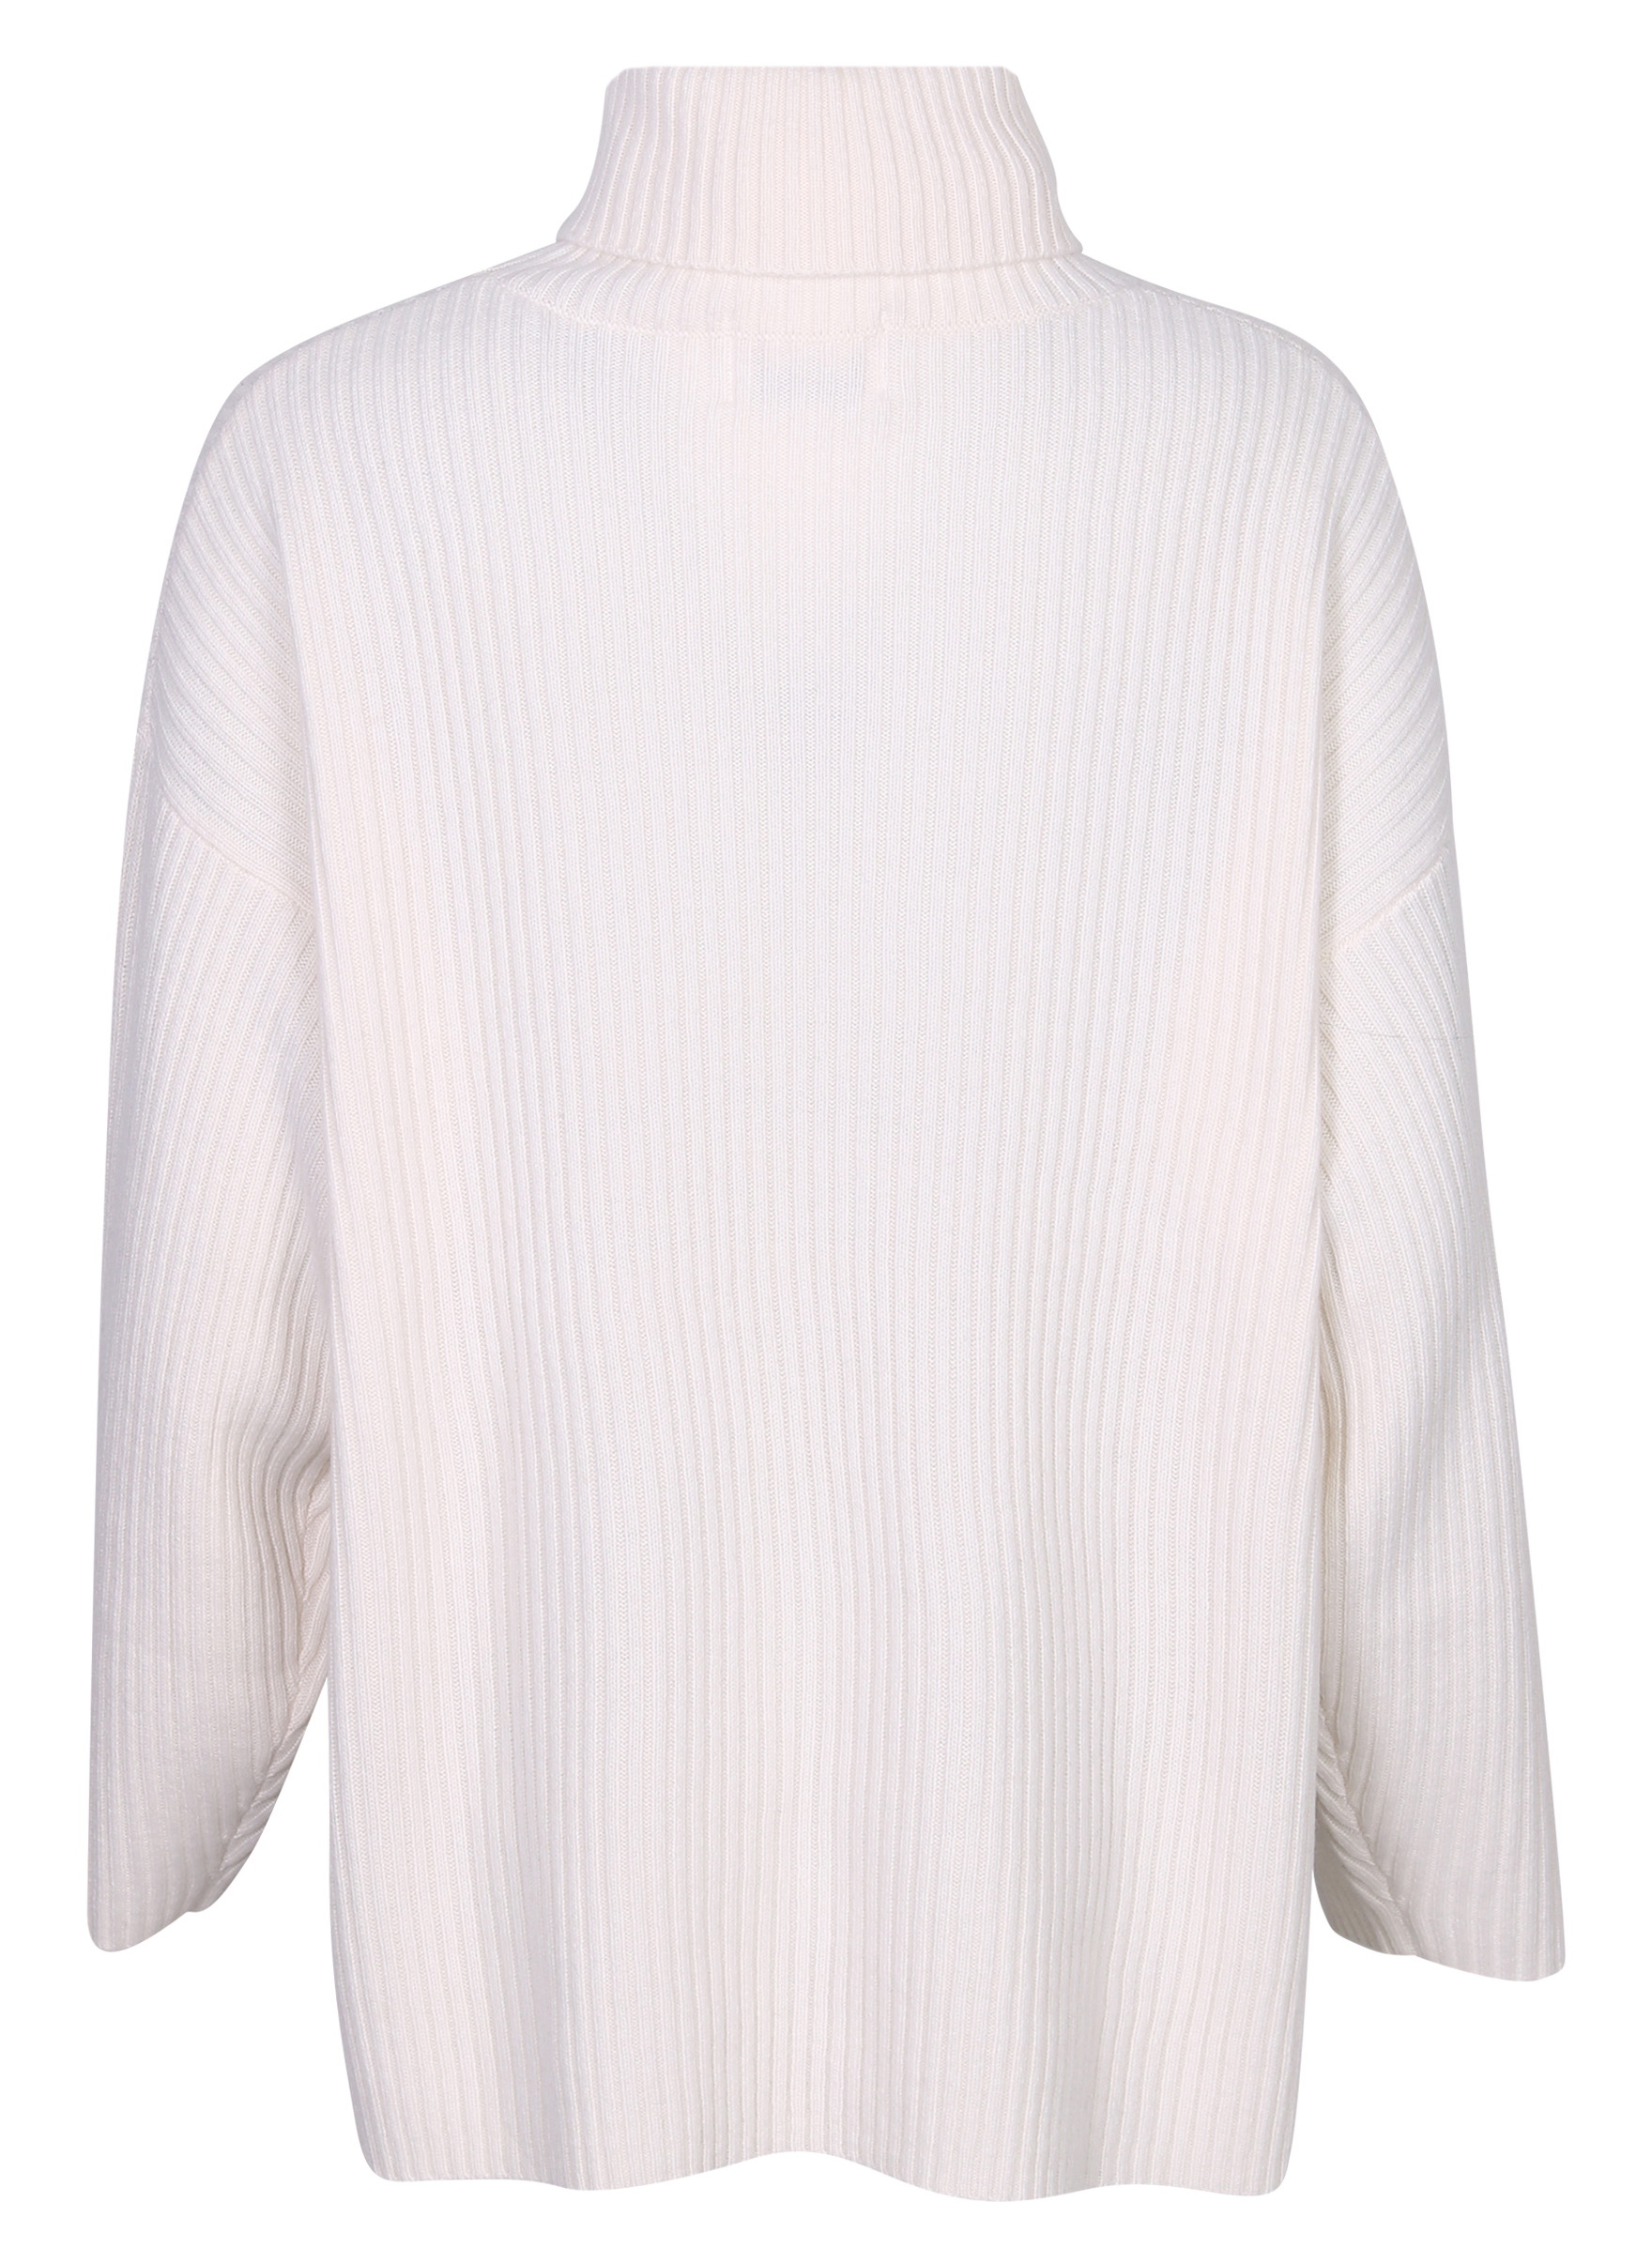 Flona Cashmere Turtle Neck Sweater in Offwhite